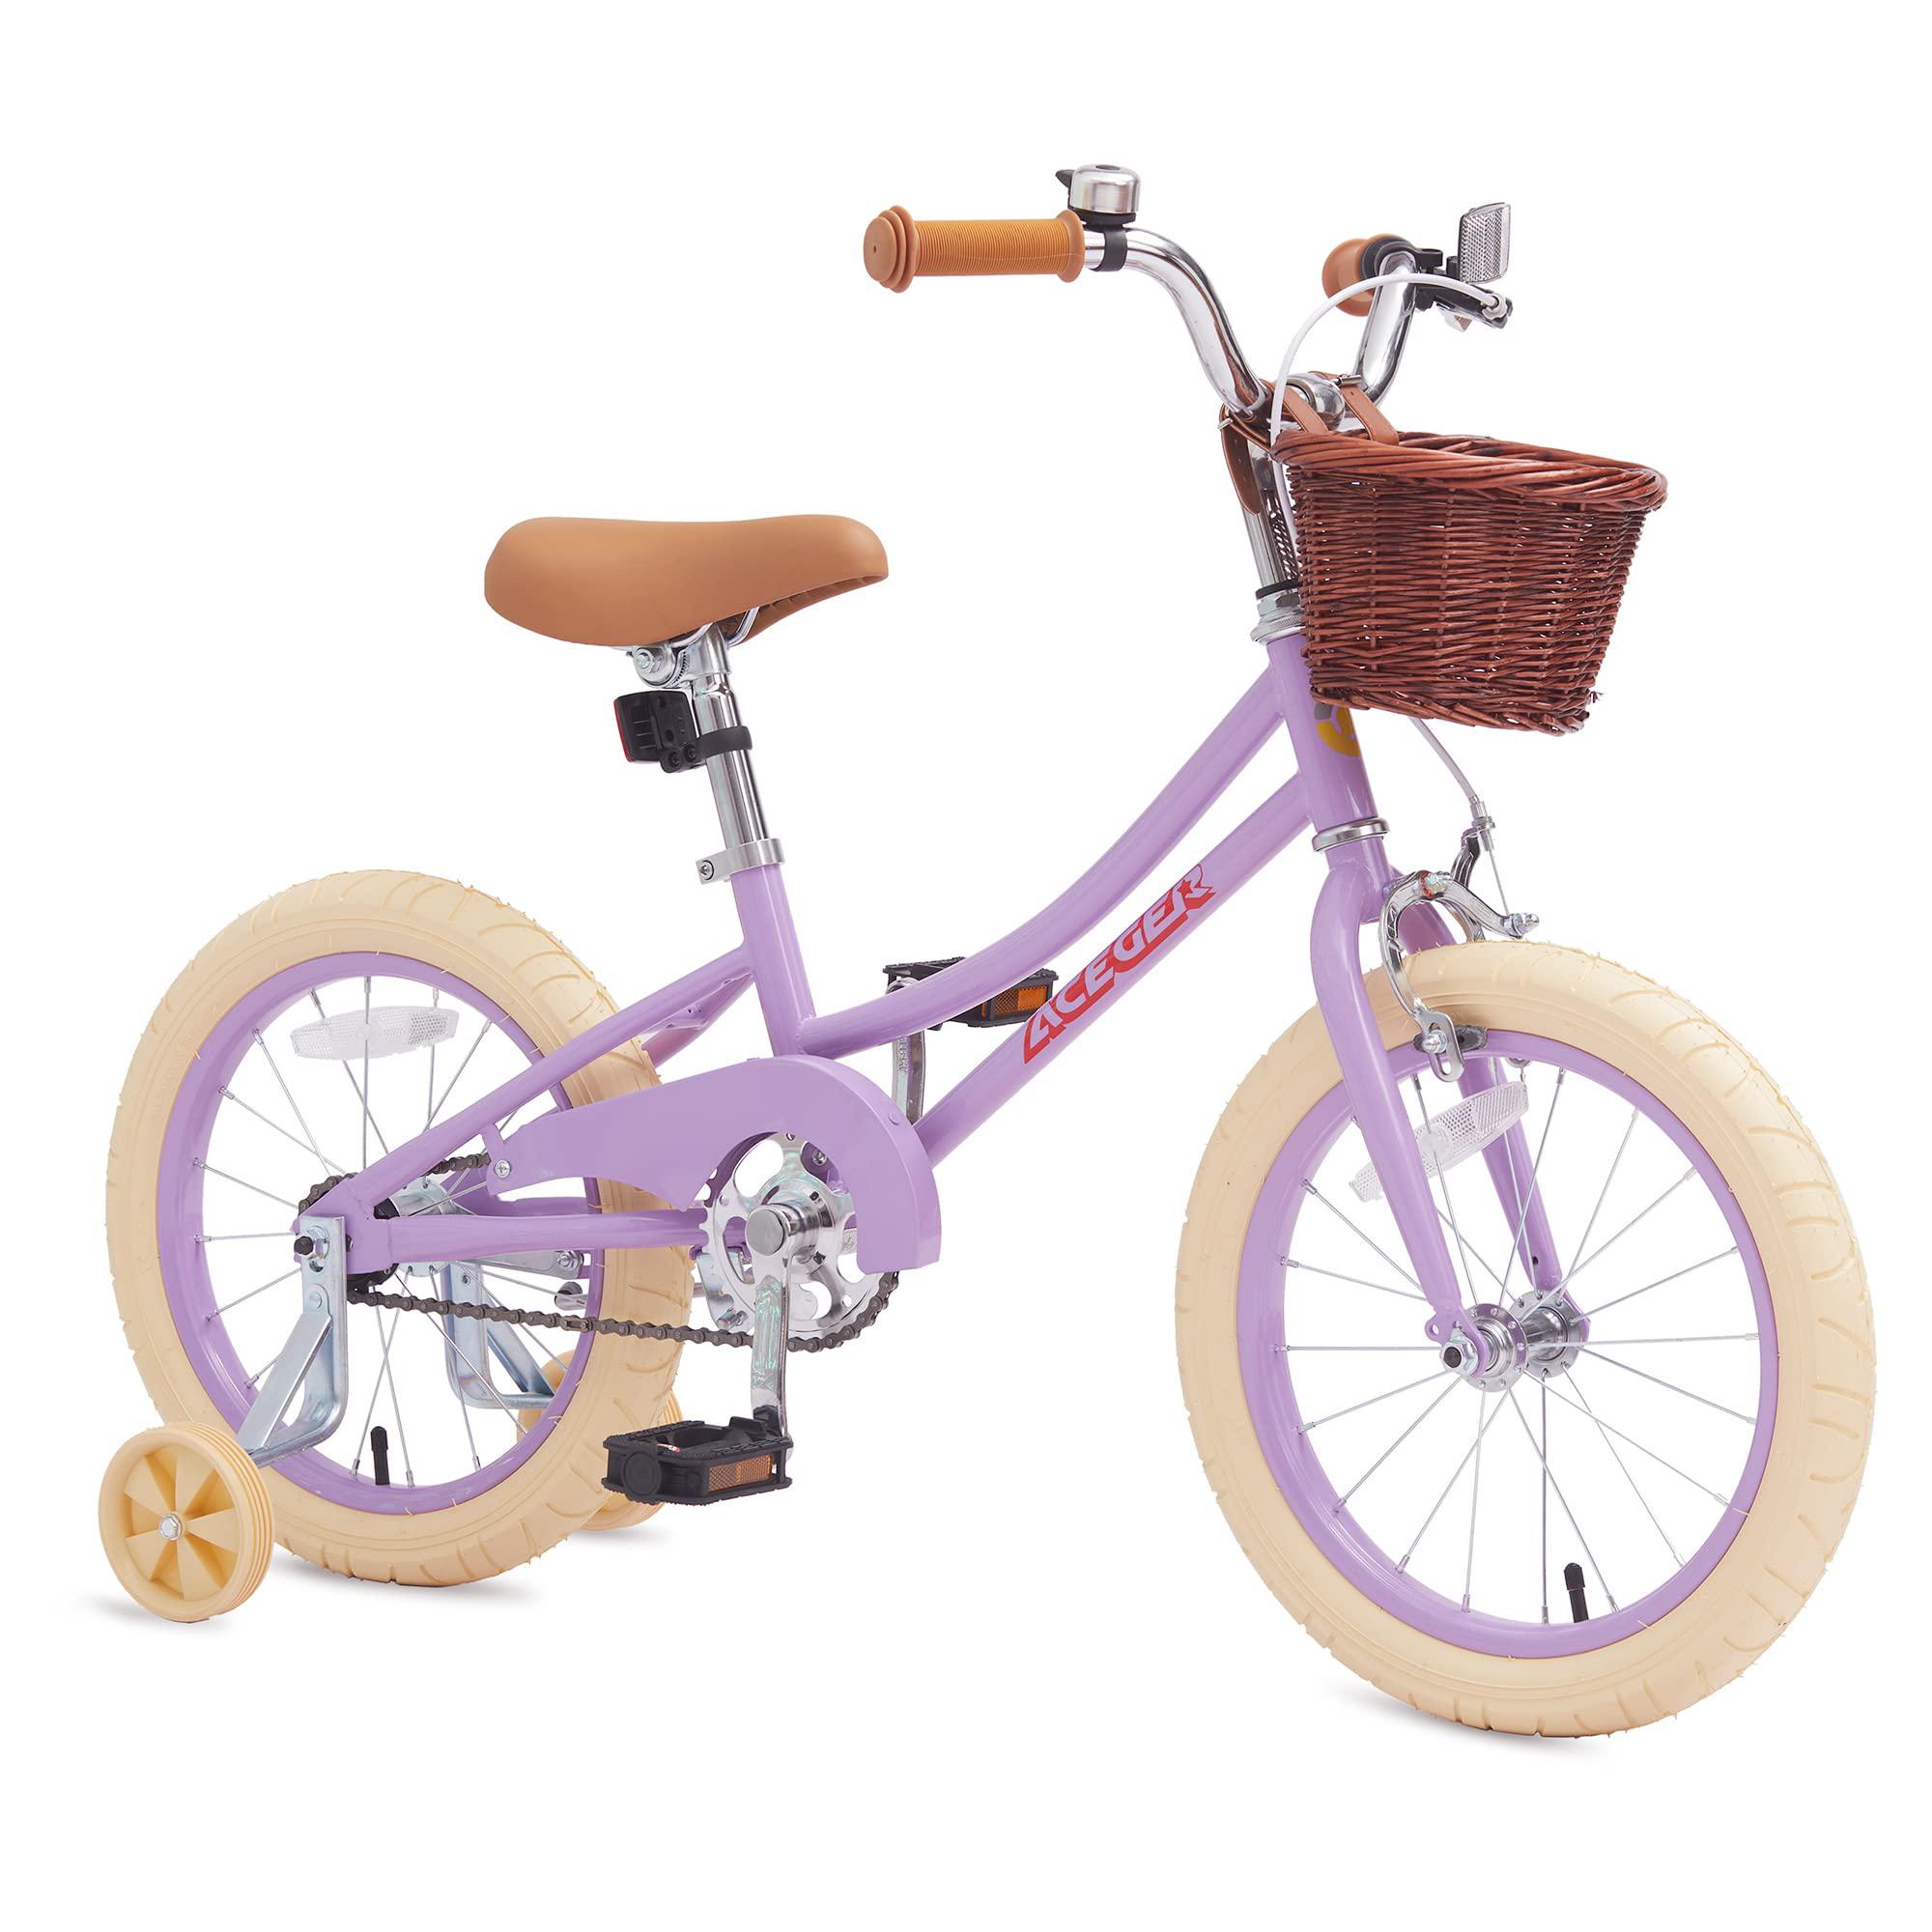 aceger girls bike with basket, kids bike for 3-13 years, 14 inch with training wheels, 16 inch with training wheels and kicks